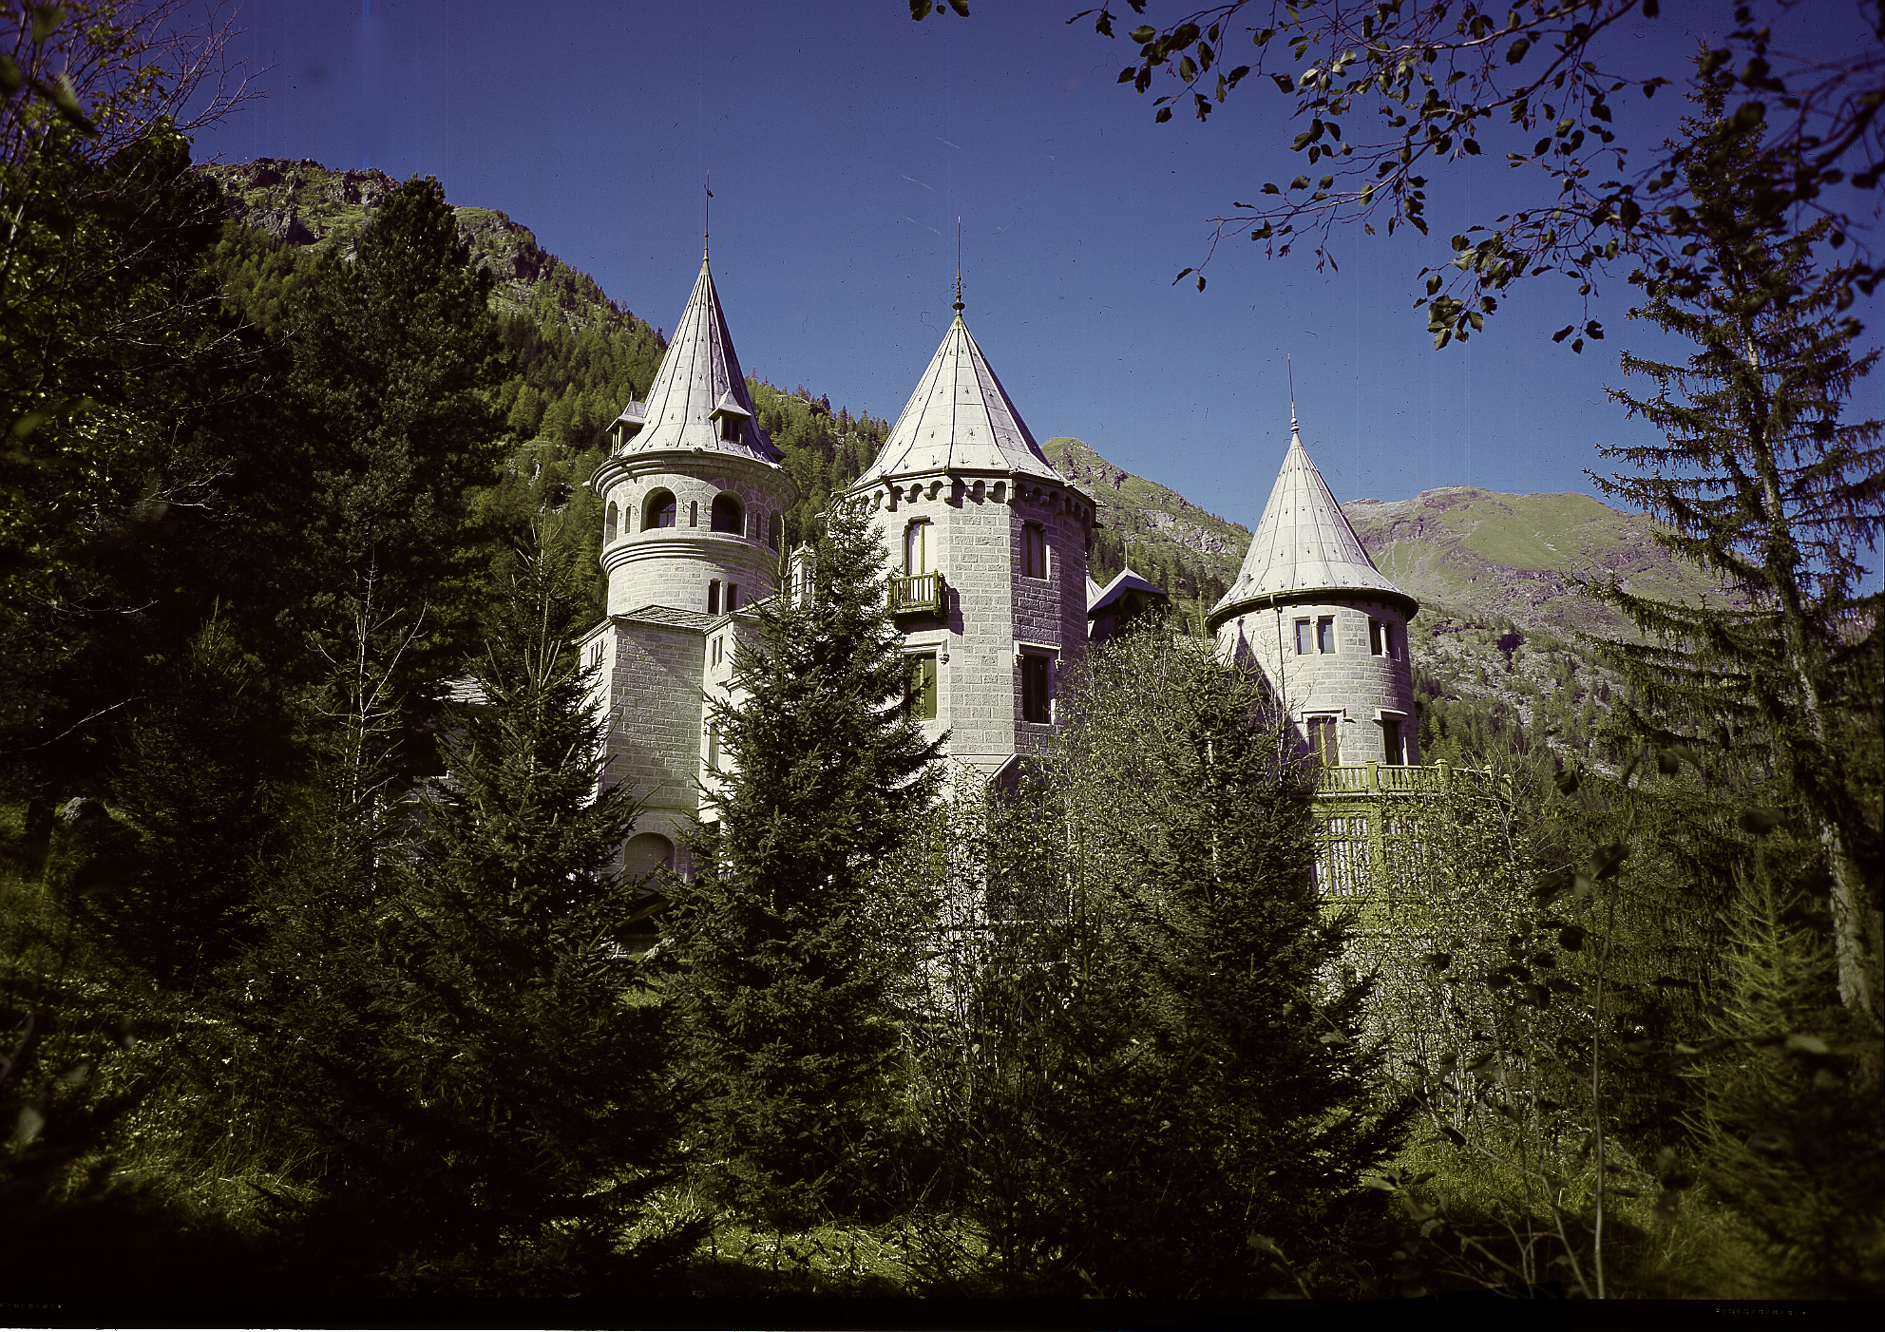 Castel Savoia, Gressoney Saint Jean, castel savoia, valle d'aosta, location, cineturismo, aosta